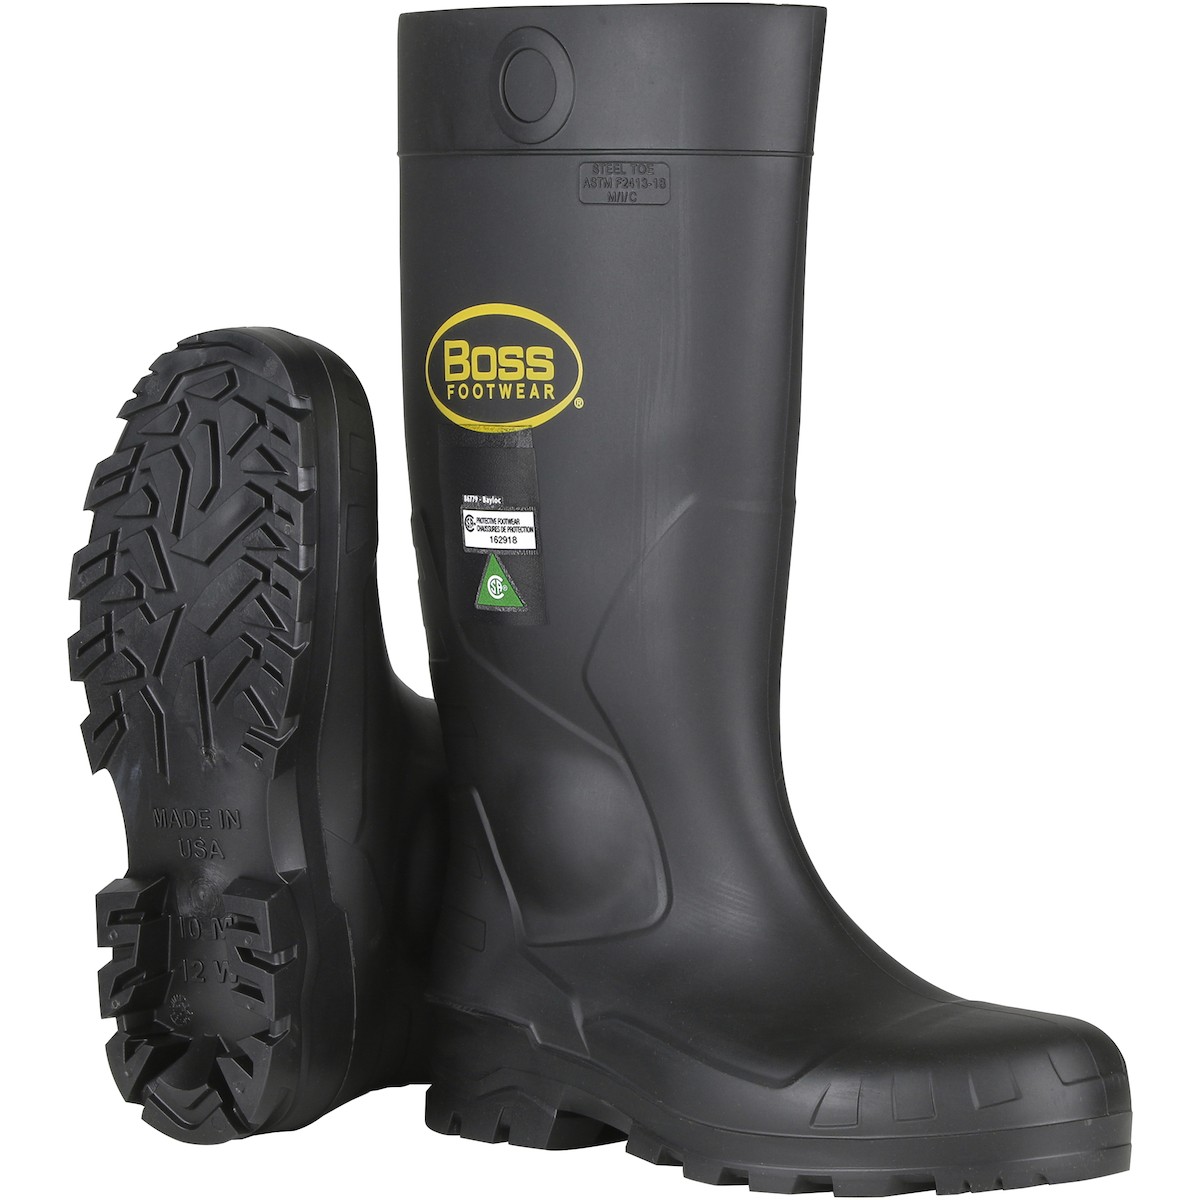 Boss® Footwear Black PVC Full Safety Steel Toe and Midsole Boot